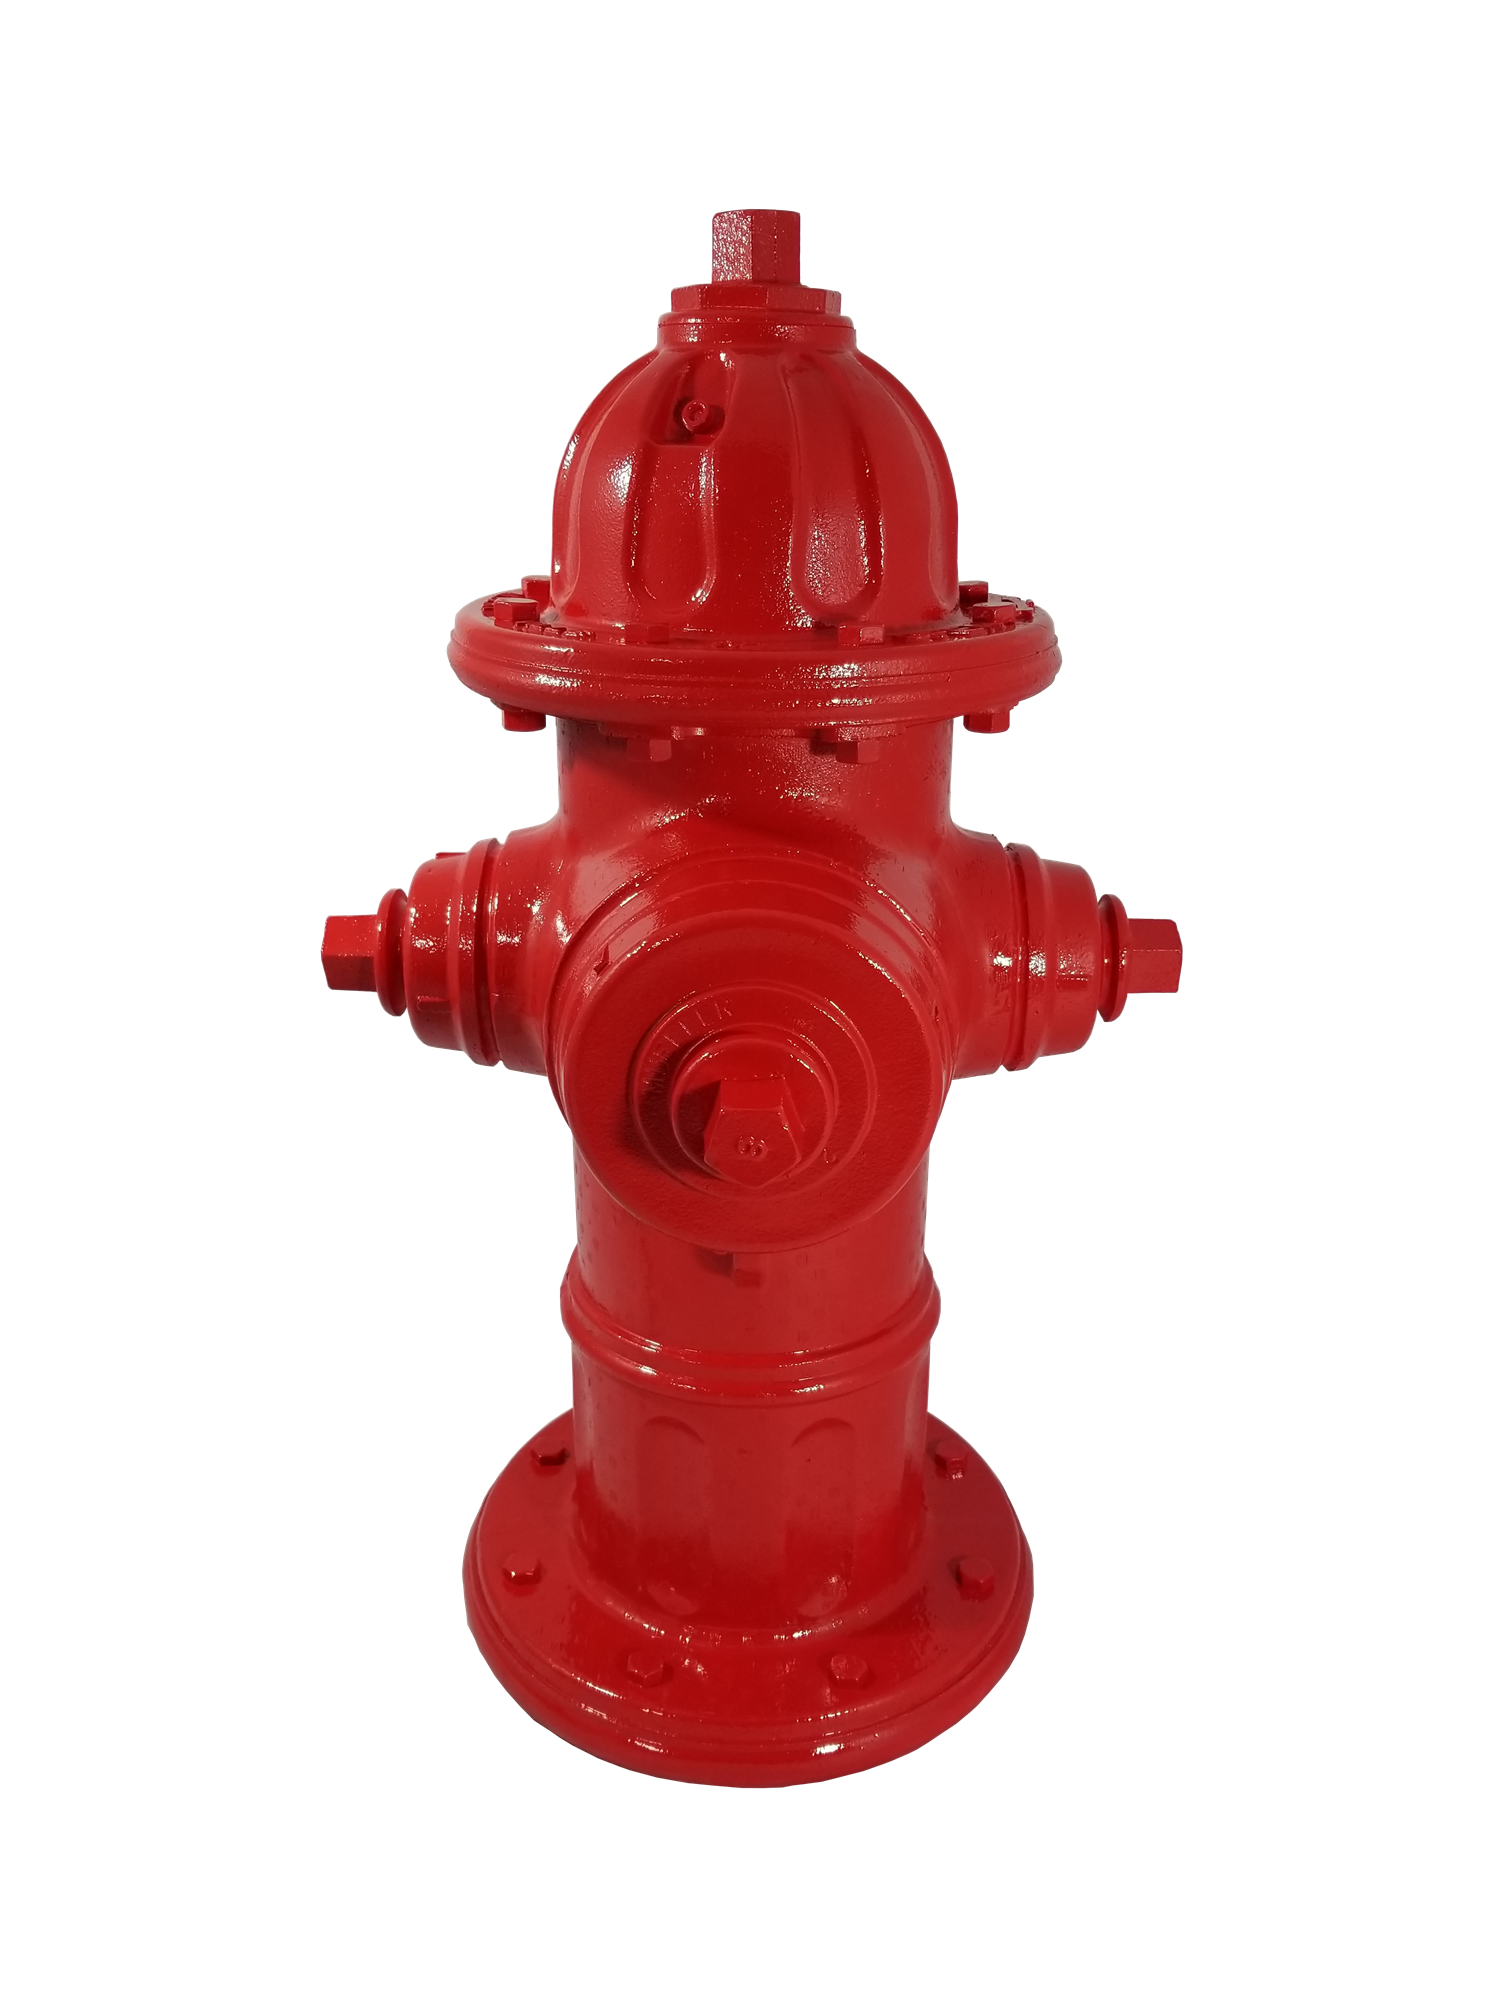 Fire Hydrant Transparent Background SVG Clip arts